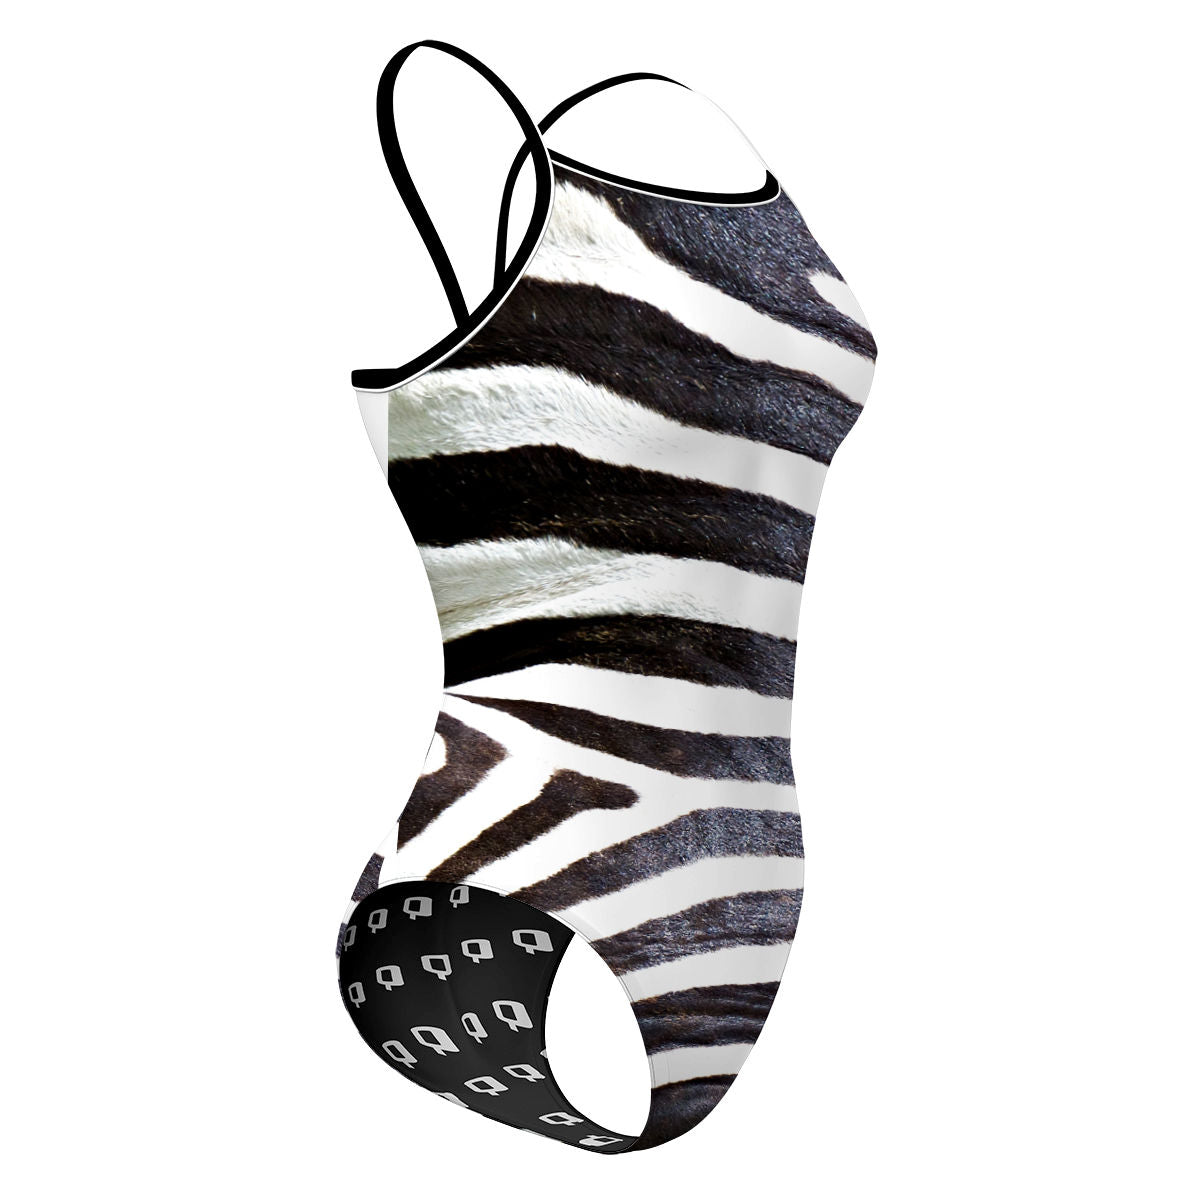 Zebra - Sunback Tank Swimsuit